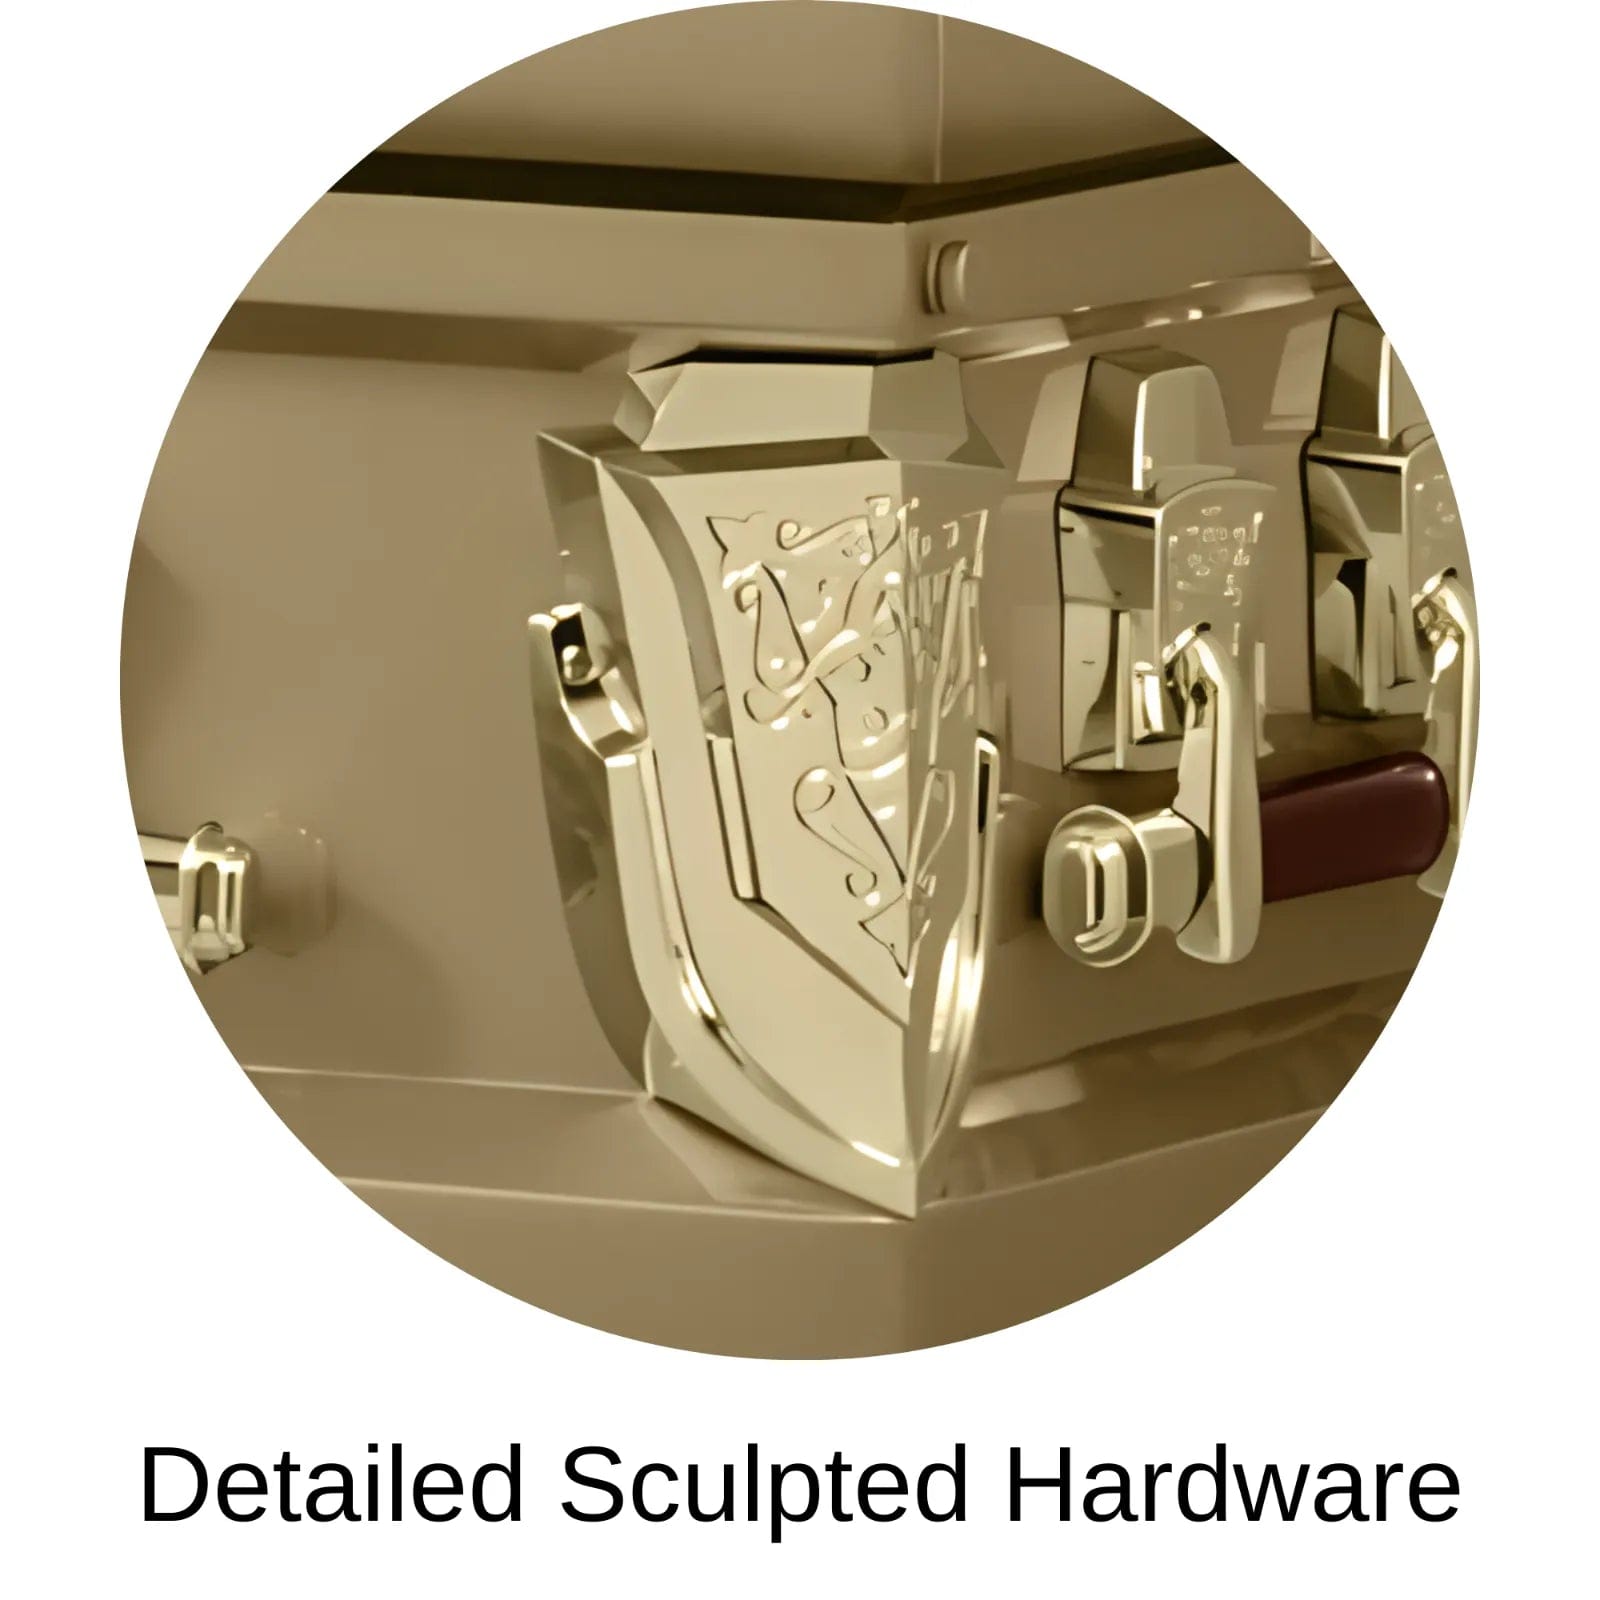 Detailed Sculpted Hardware Of Titan Cambridge Series Casket 